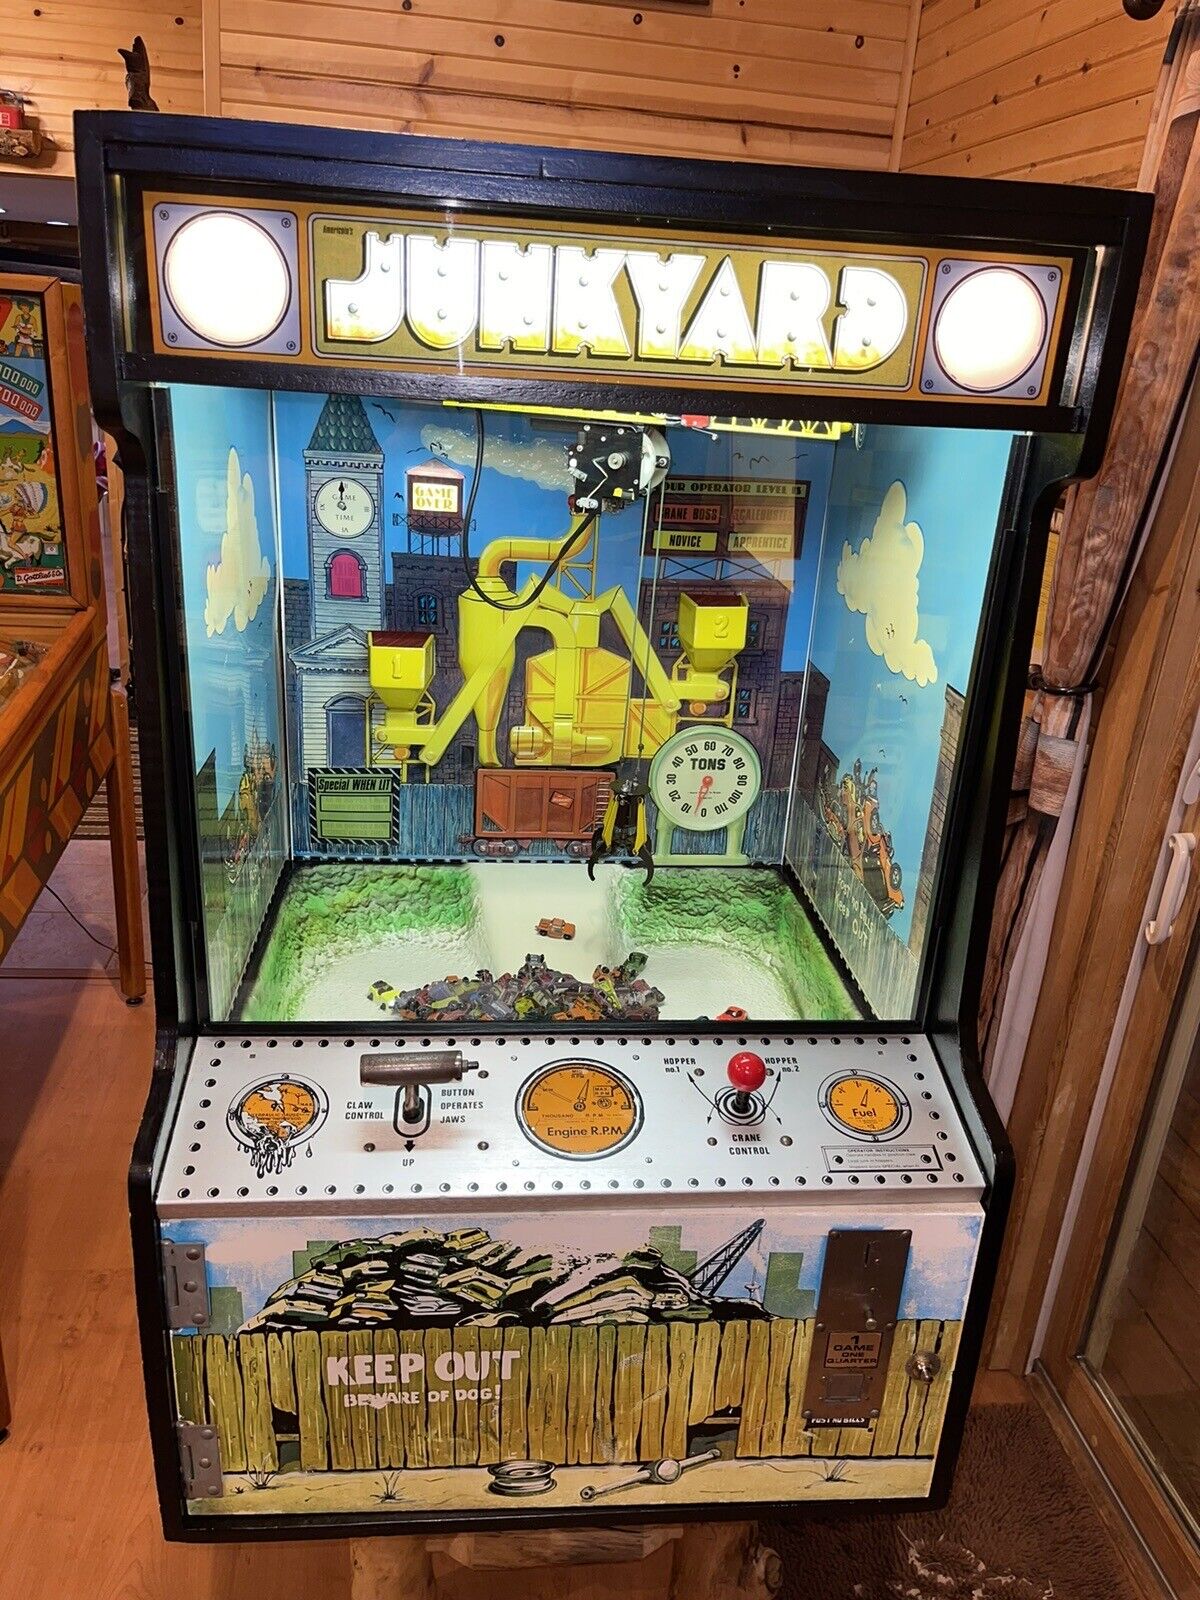 1976 Americoin Junkyard Crane Arcade Game (Professionally Restored)